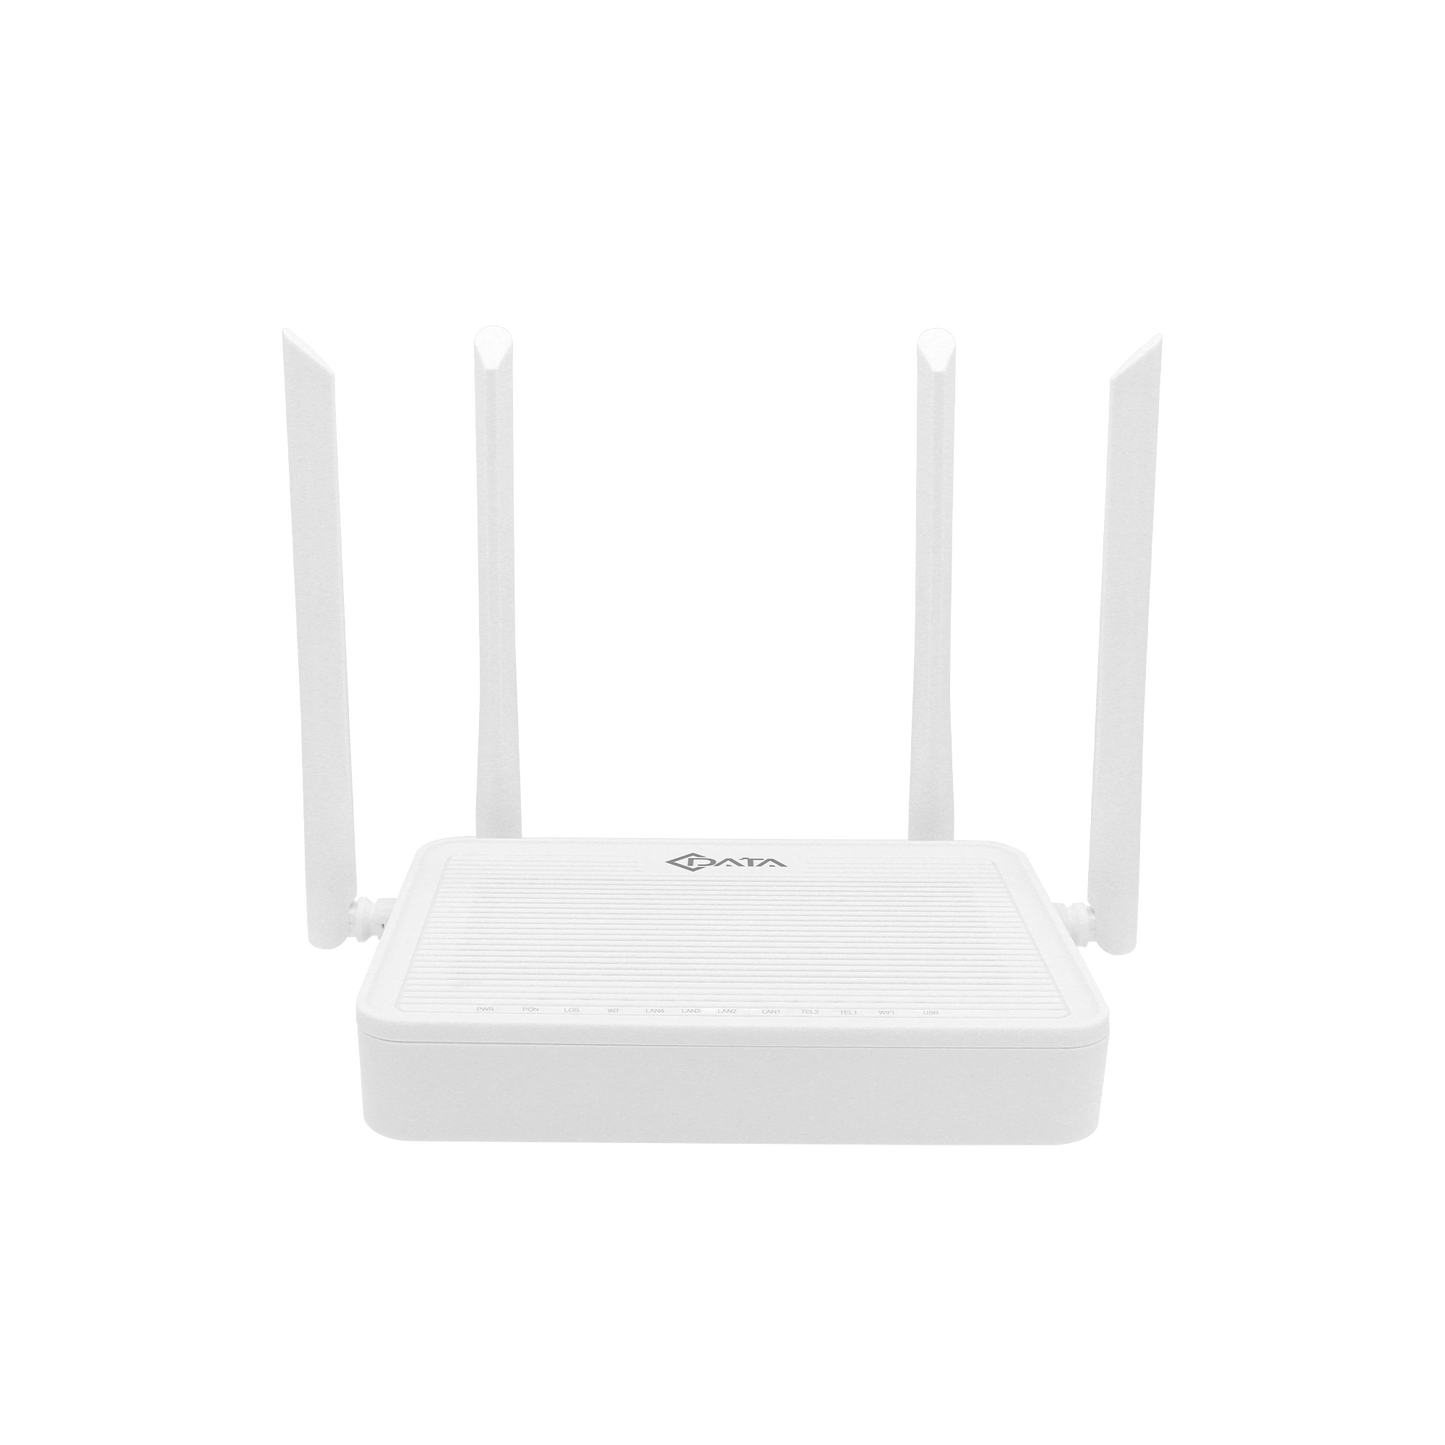 Wi-Fi 6 ONU, 2.4GHz/5GHz 802.11 b/g/n/ac/ax, XPON, 4 Ethernet ports 10/100/1000, 2 TEL (POTS) ports, GPON: Up to 2.488Gbps/1.244Gbps